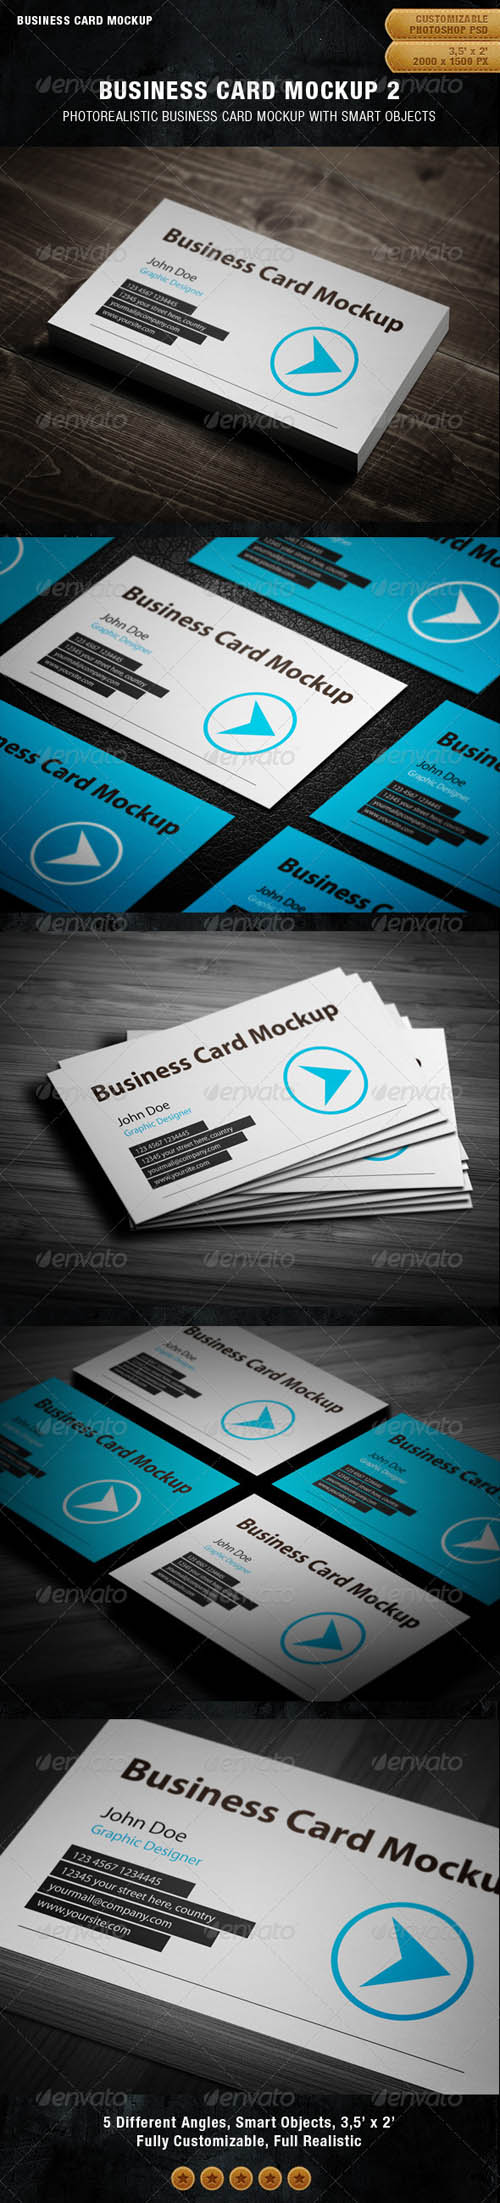 GraphicRiver - Business Card Mockup 2